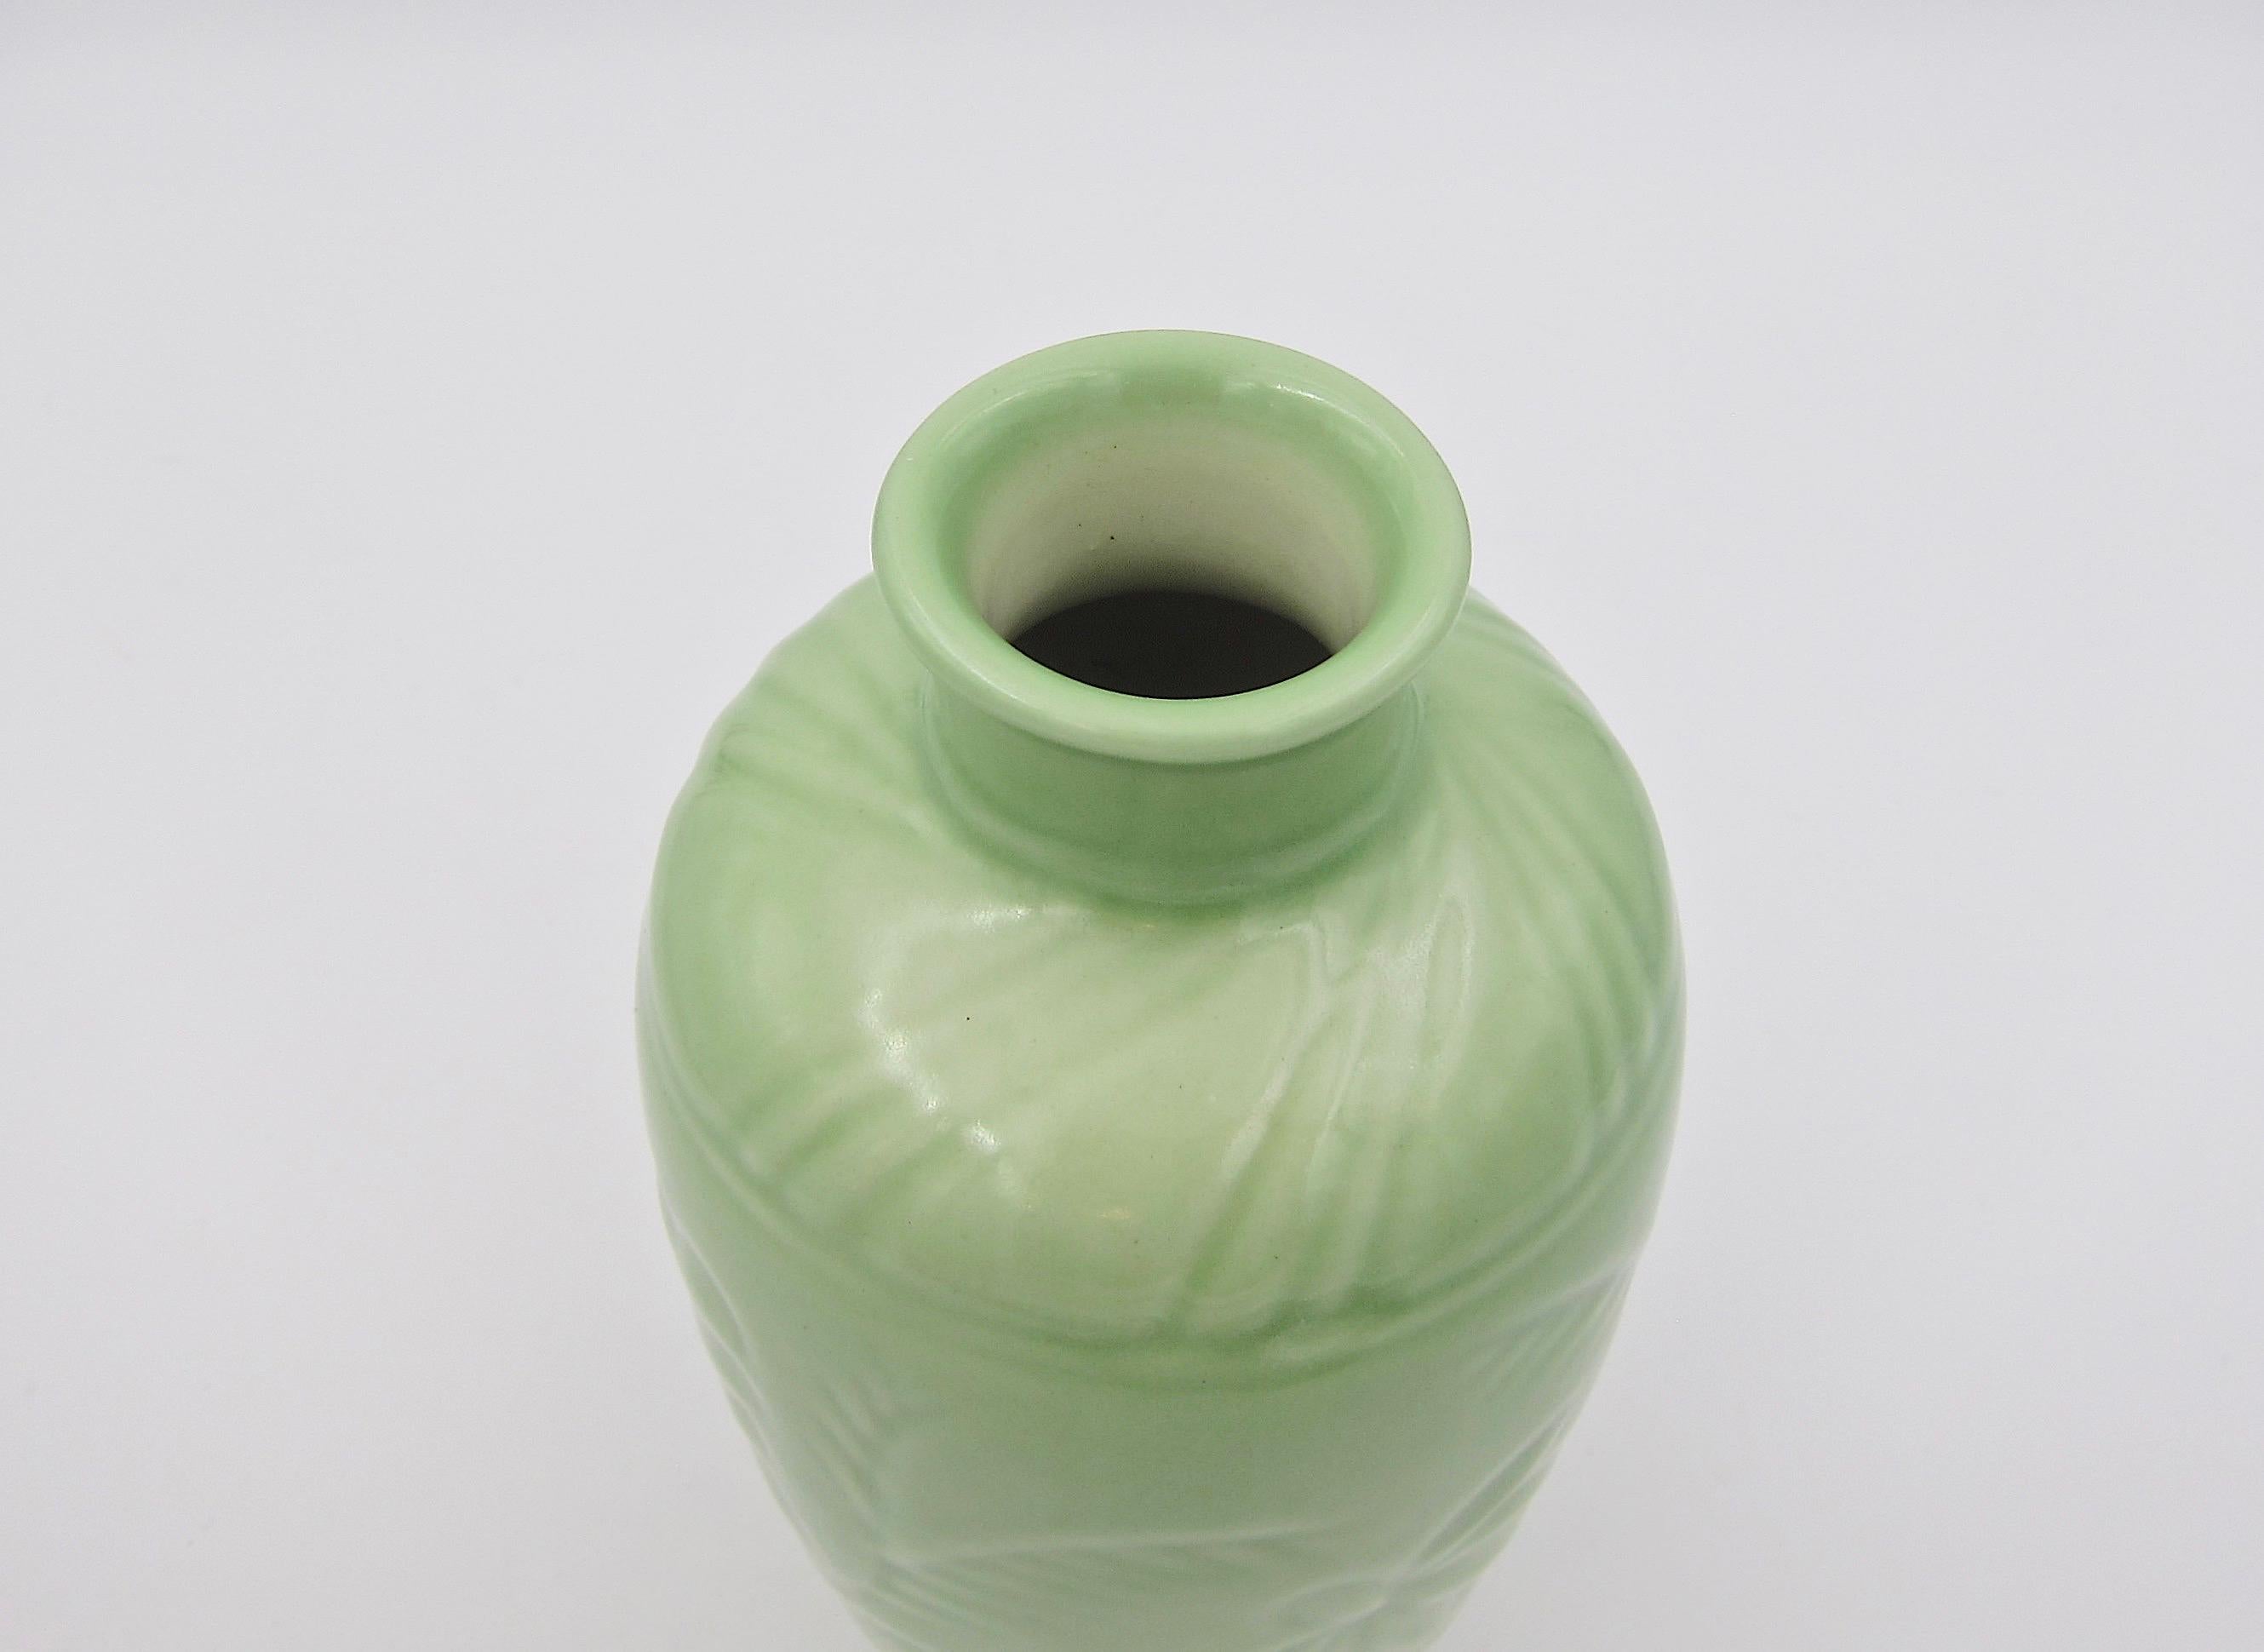 Glazed Vintage Rookwood Pottery Vase with Glossy Green Glaze, 1935